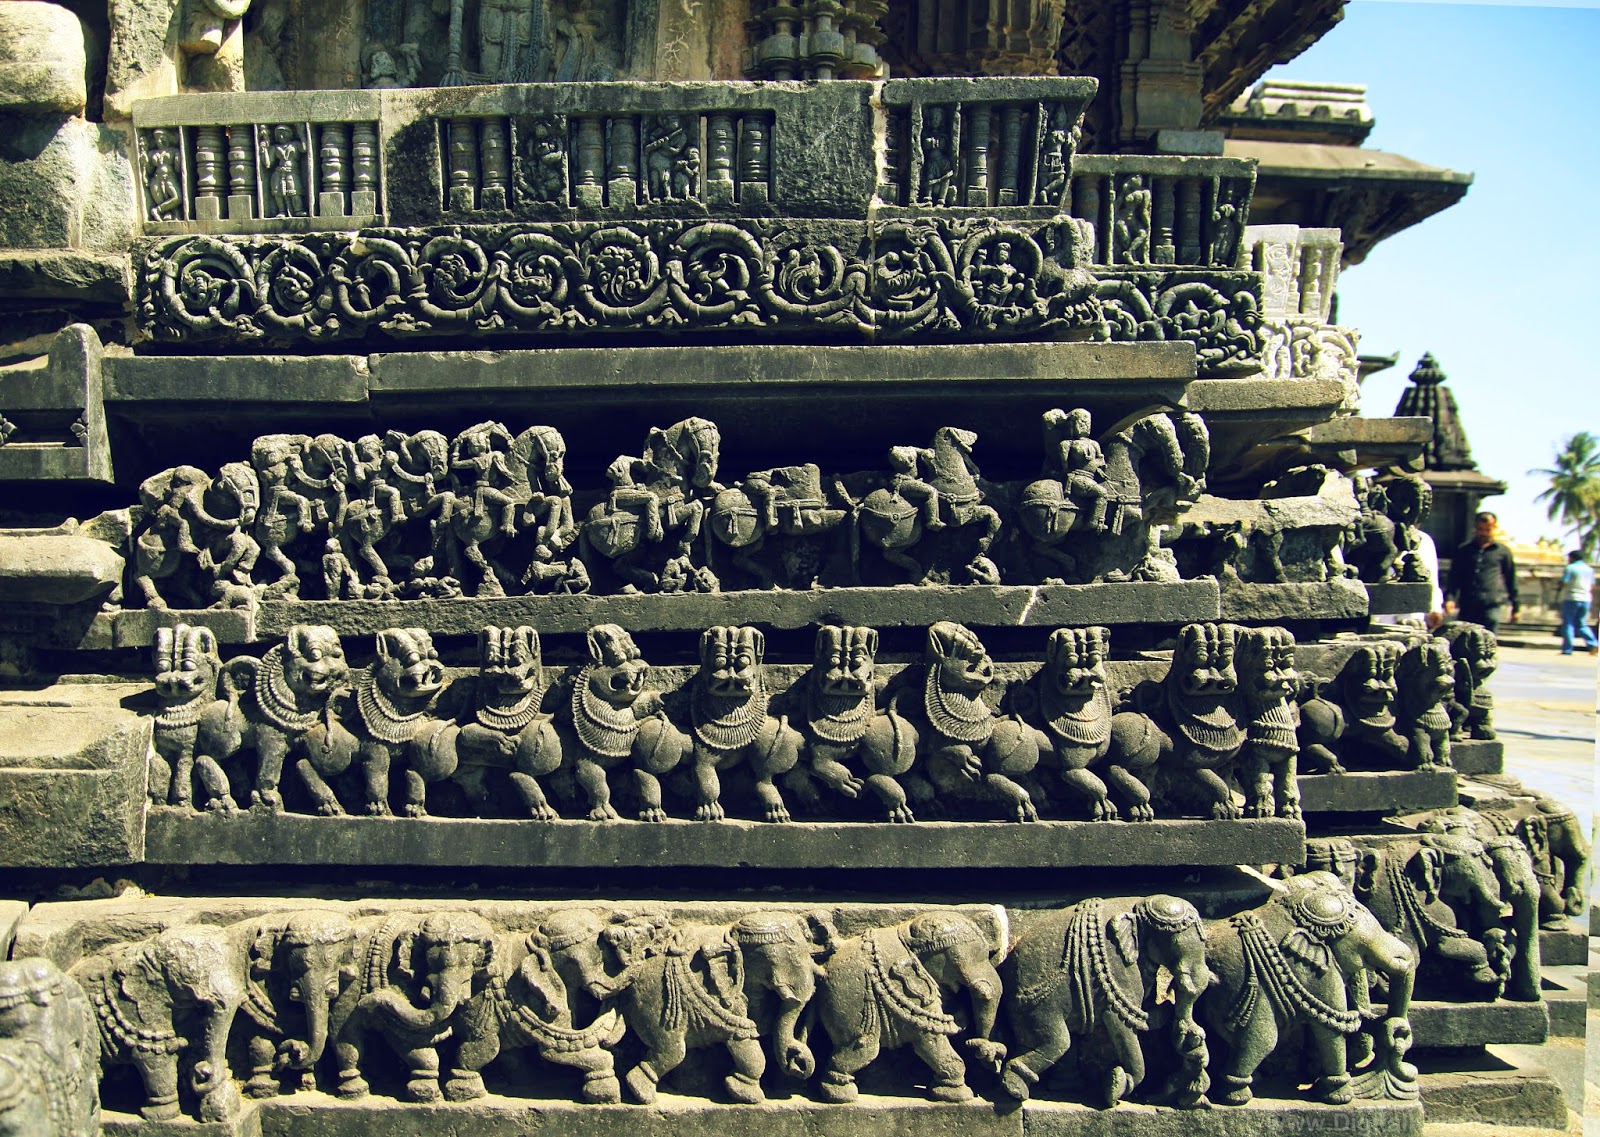 Hoysala Temple